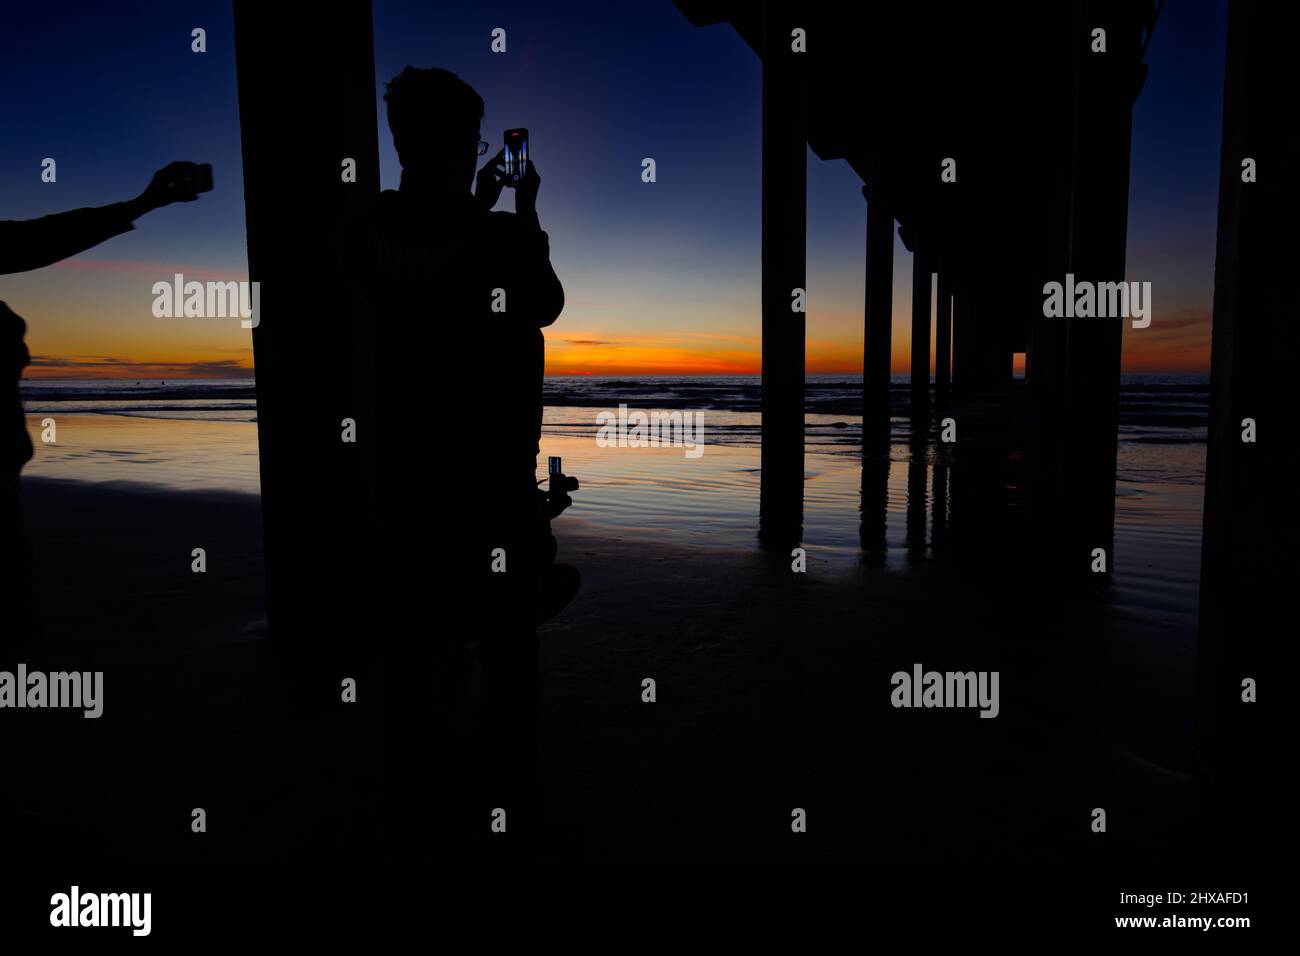 La JOLLA, CALIFORNIA. February 9, 2021. Visitors photographing Scripps Pier in La Jolla, California at sunset with orange and blue sky.  Photo: Mark J Stock Photo